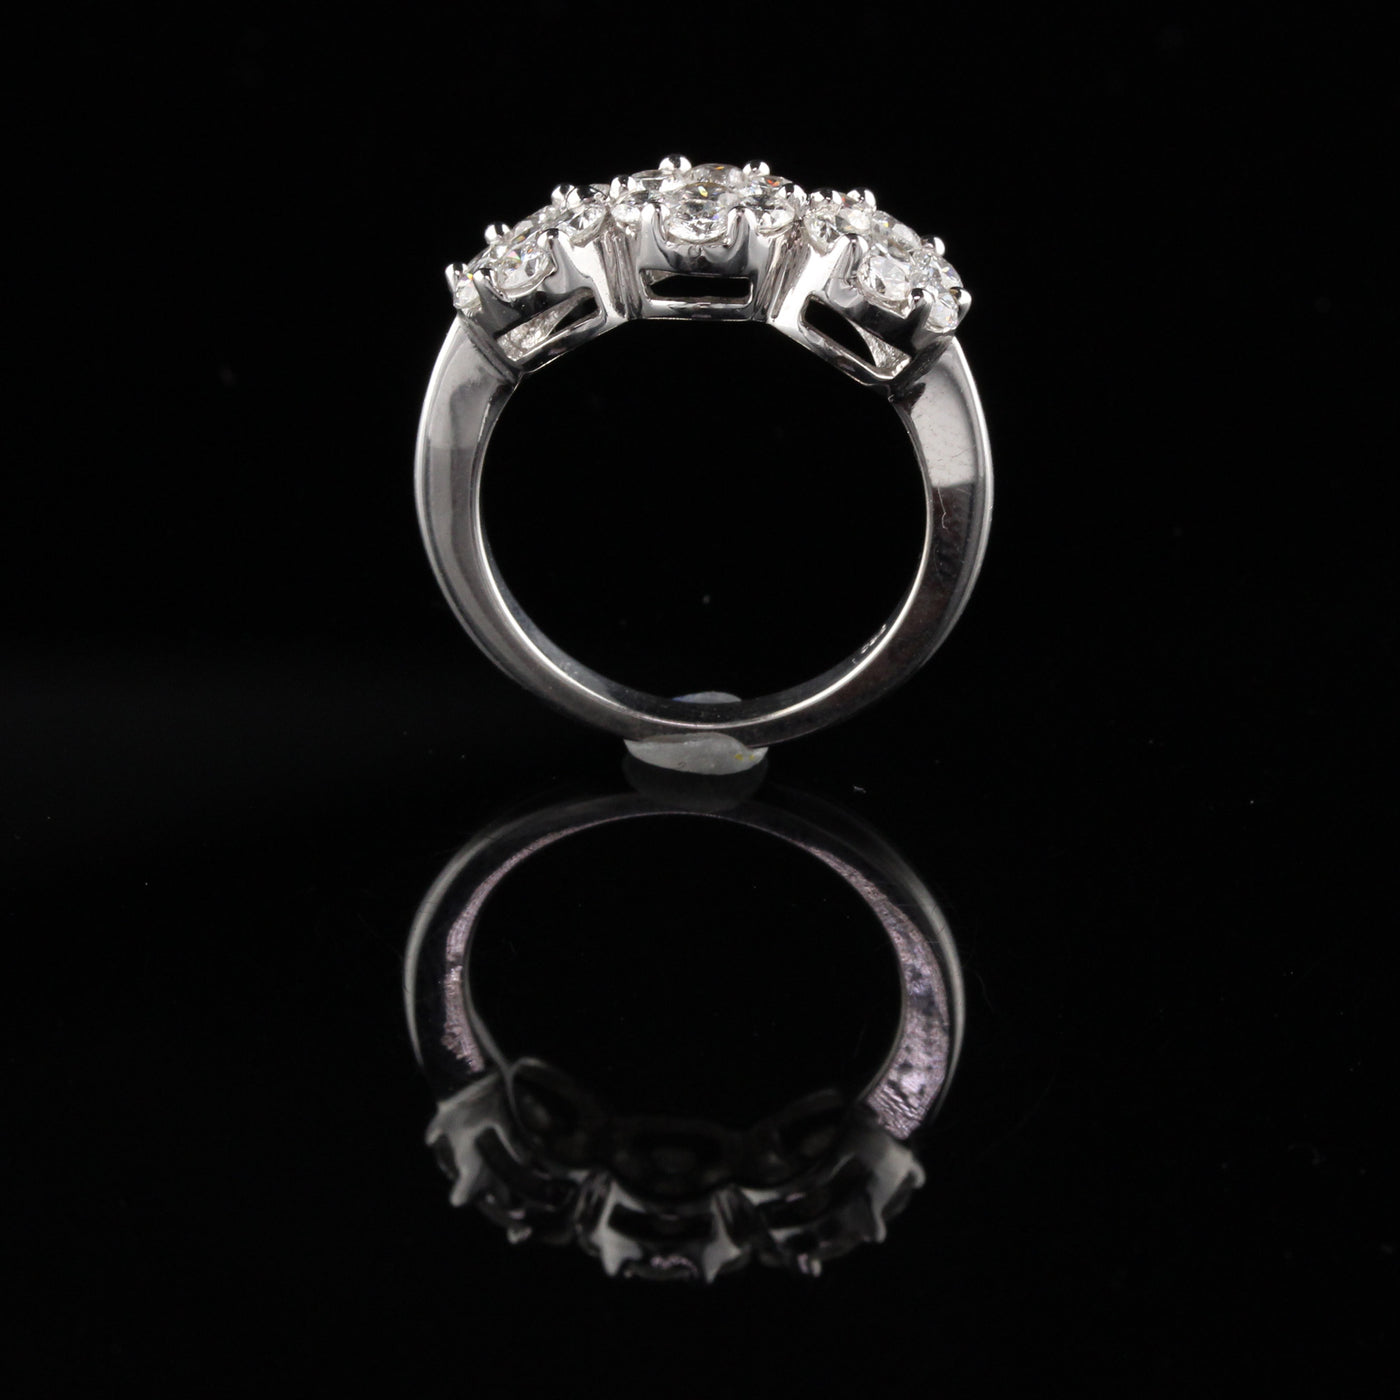 18K White Gold Diamond Engagement Ring - Size 7